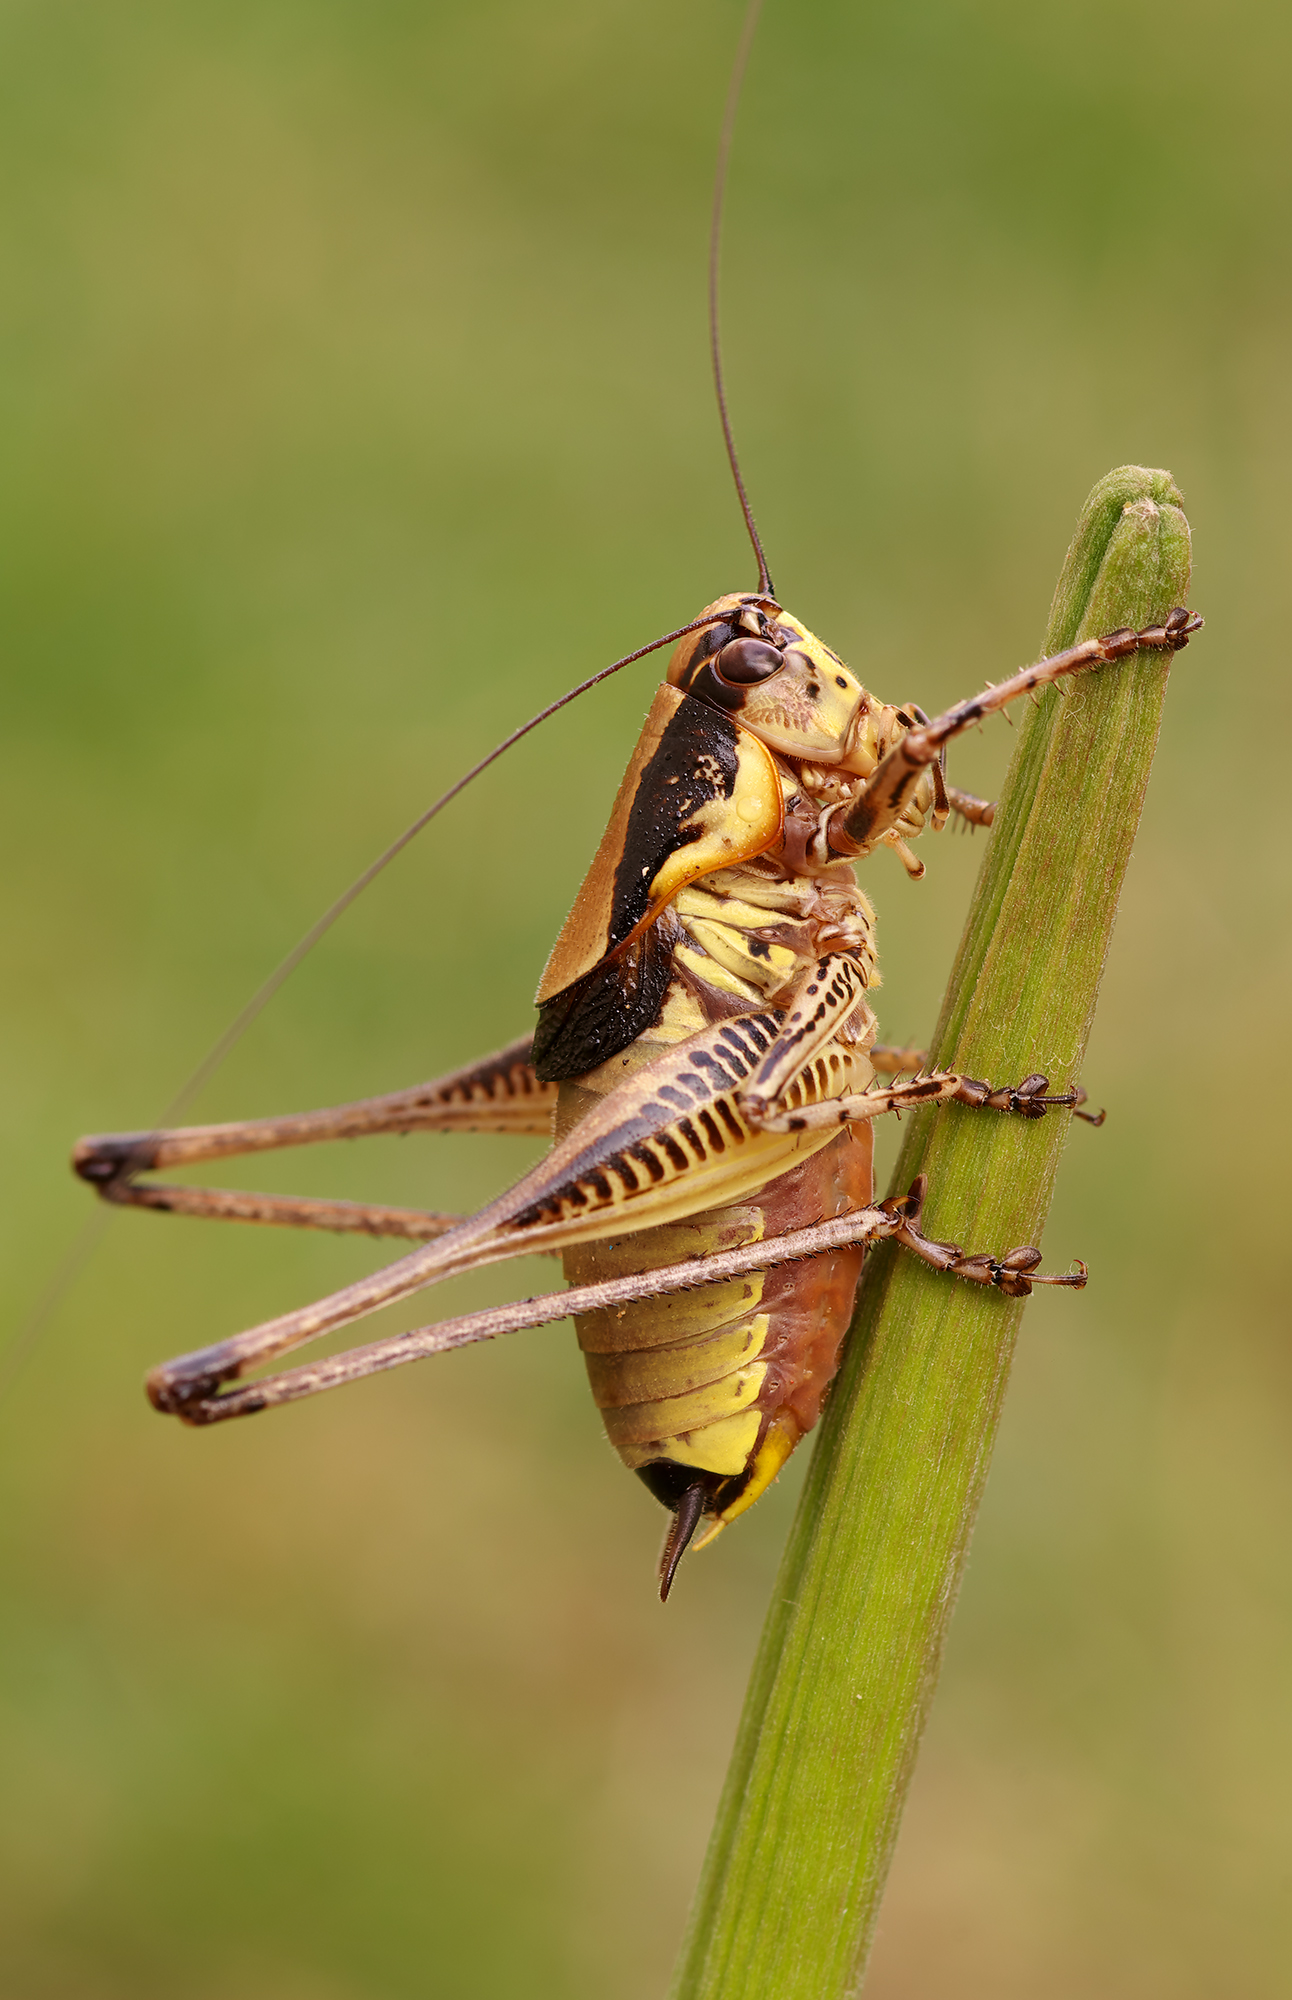 Some croatian grasshopper...